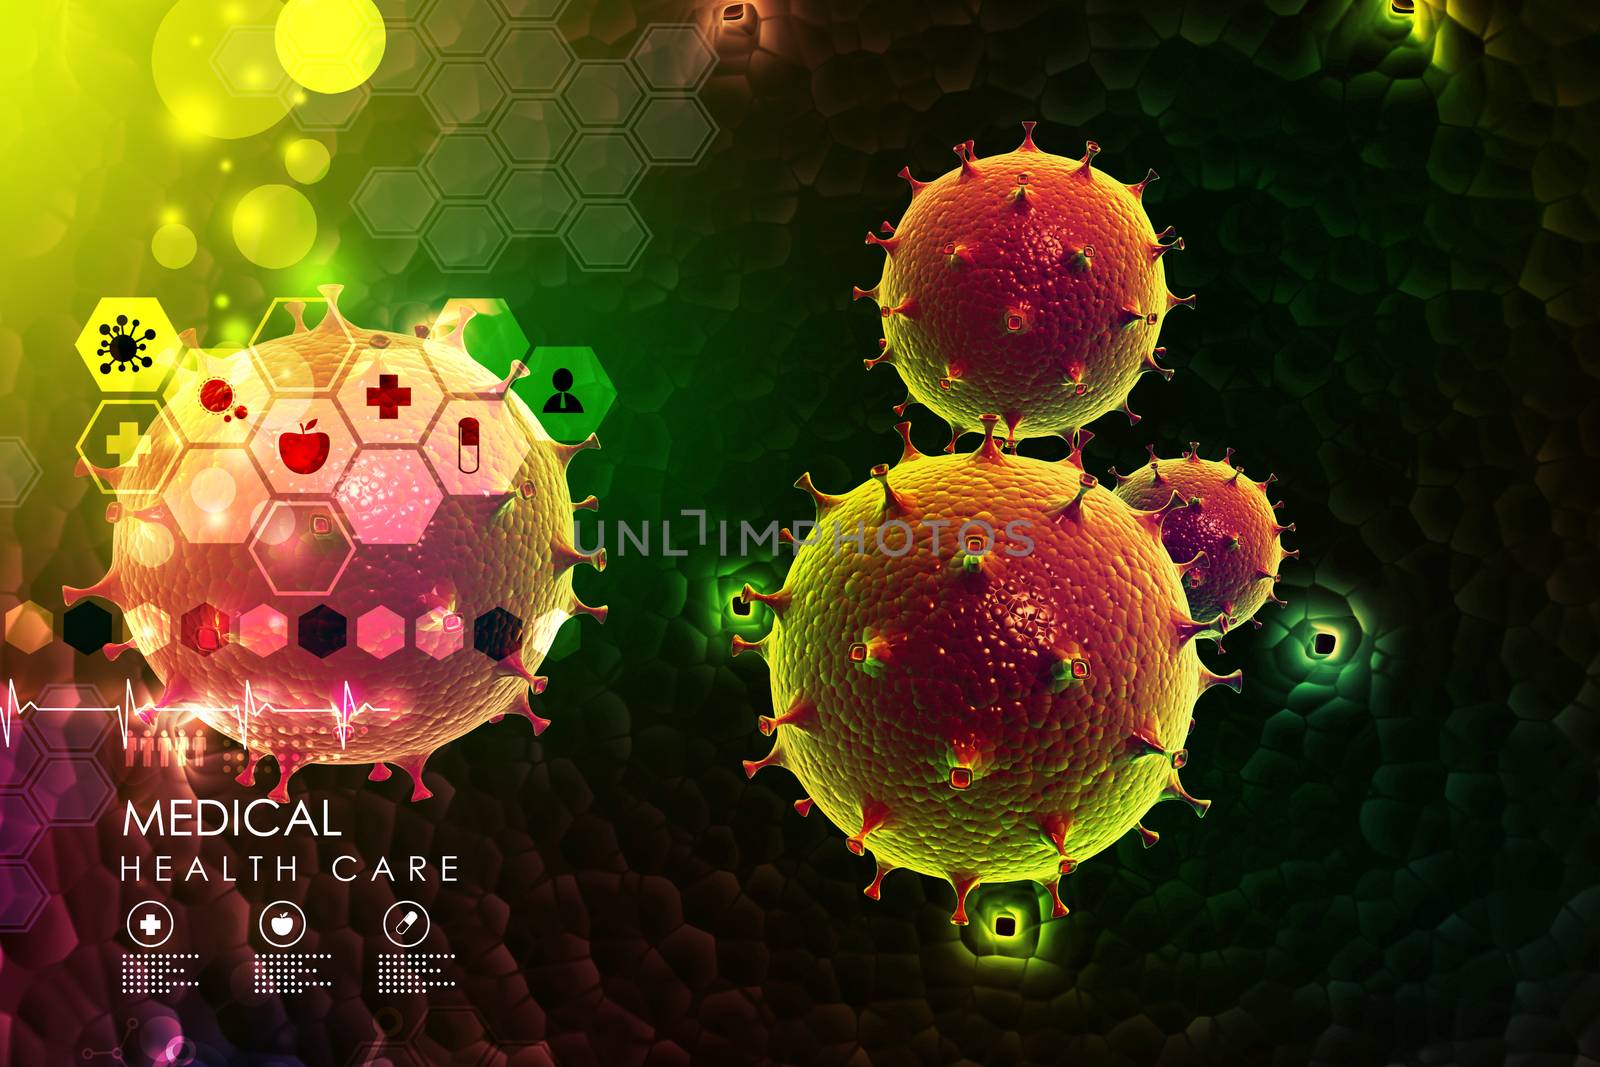 3d rendering of a virus by cuteimage